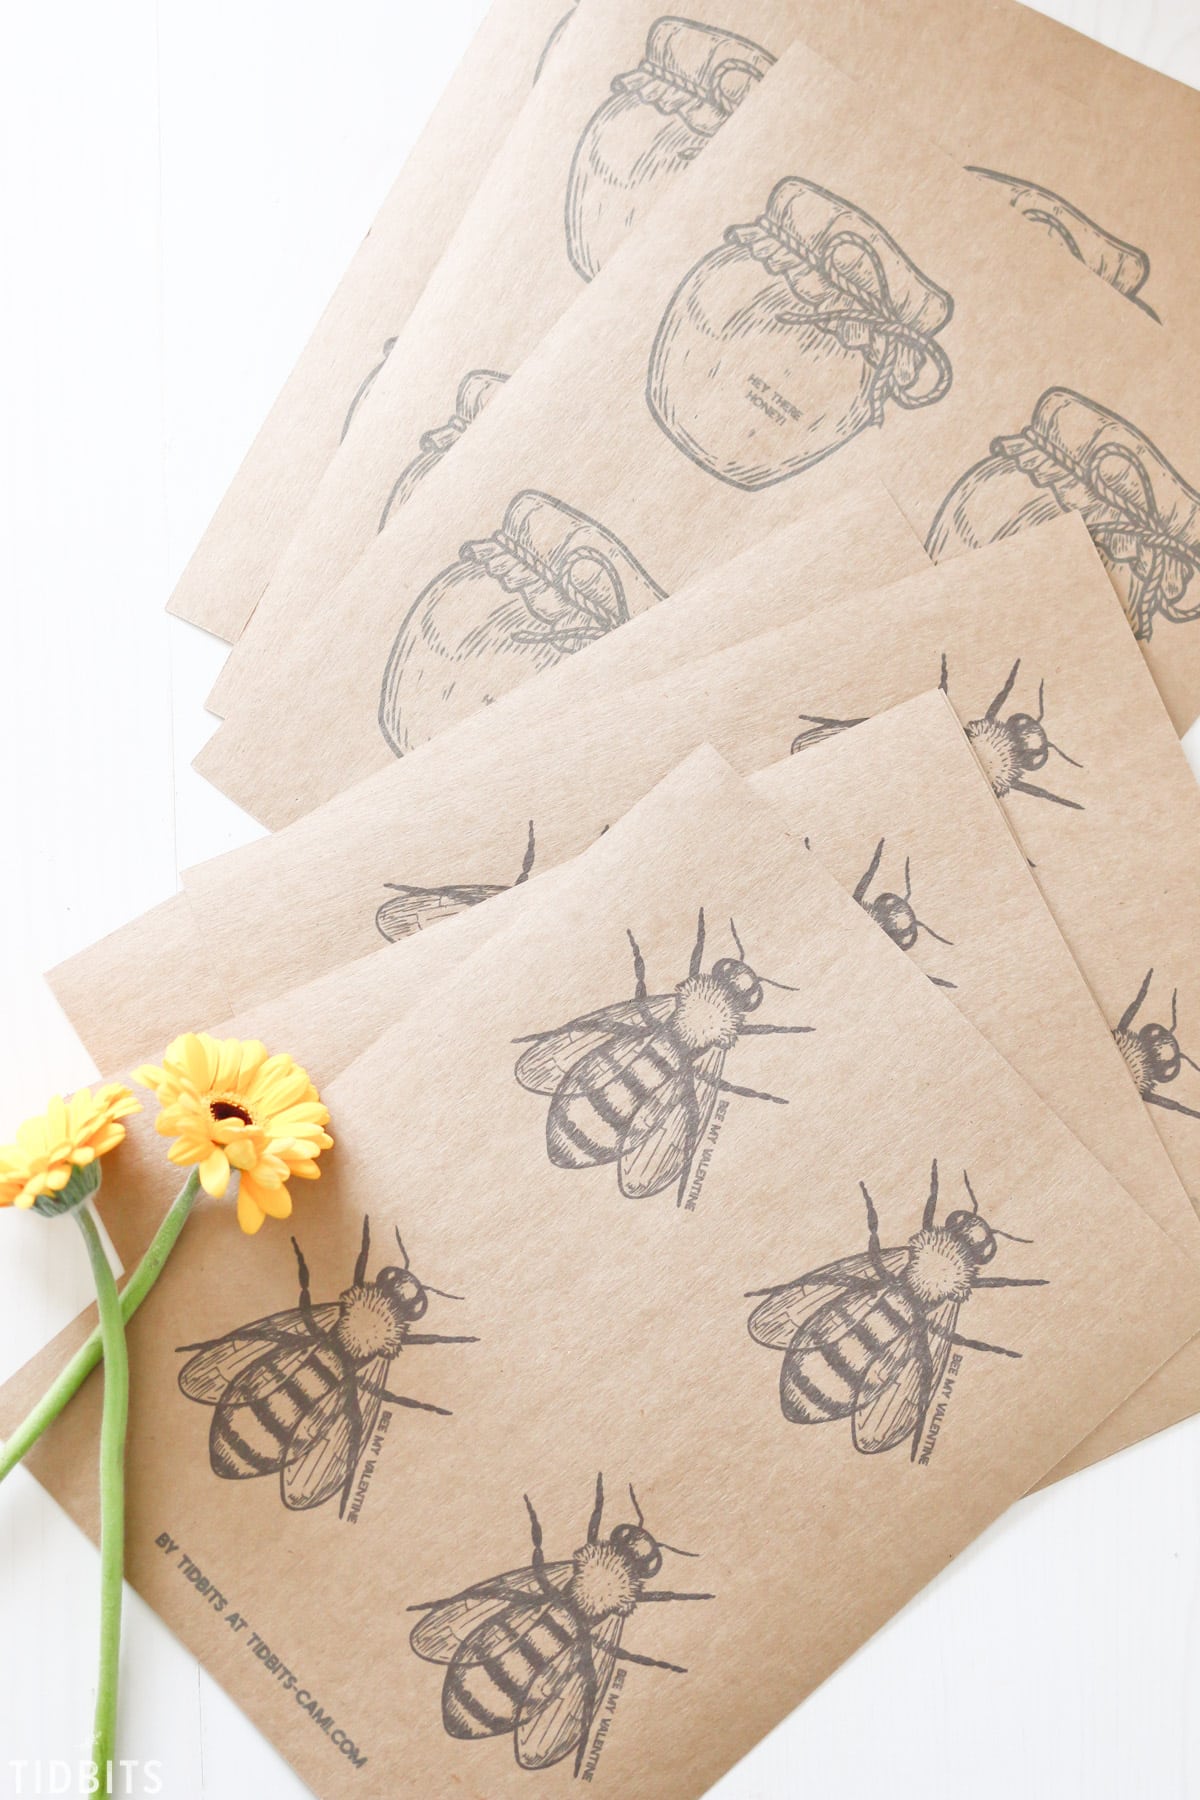 Honey Stick Valentines Printables by TIDBITS